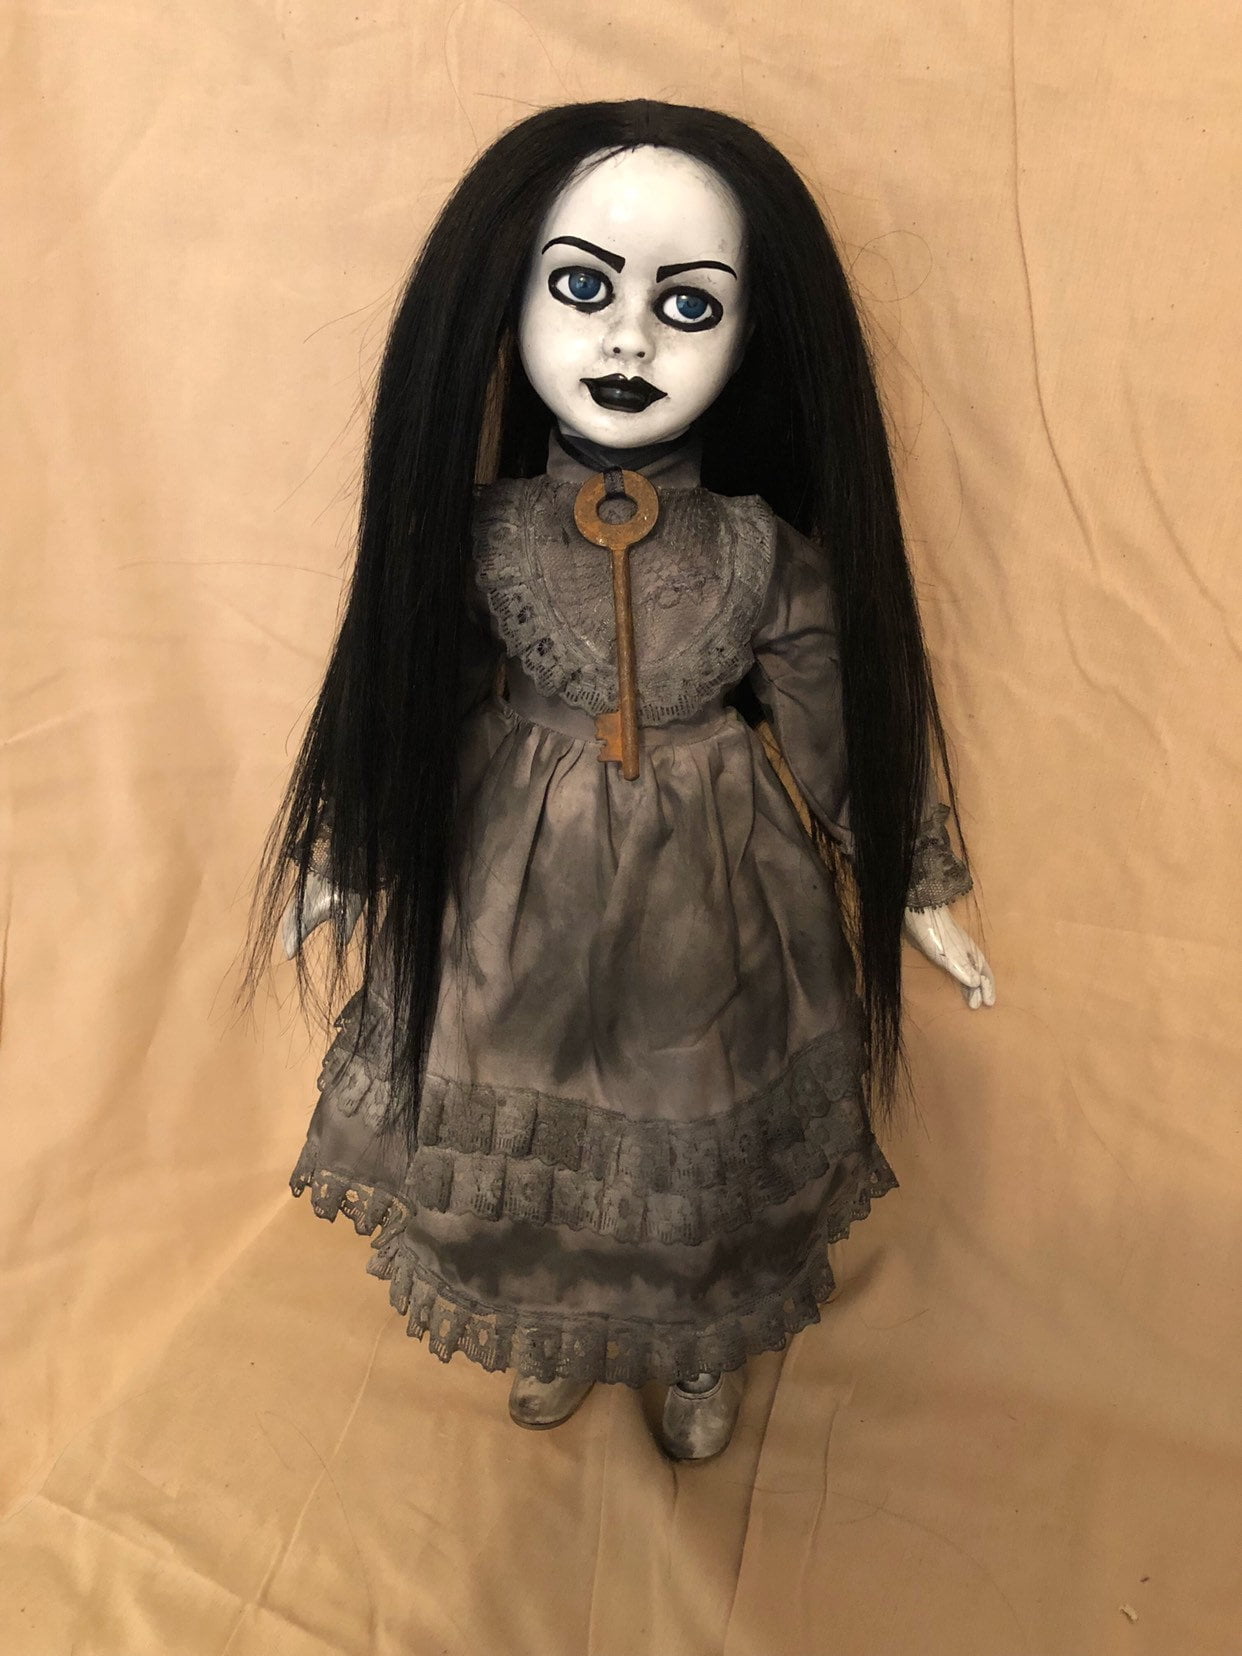 Canvas Gallery Wraps creepy doll